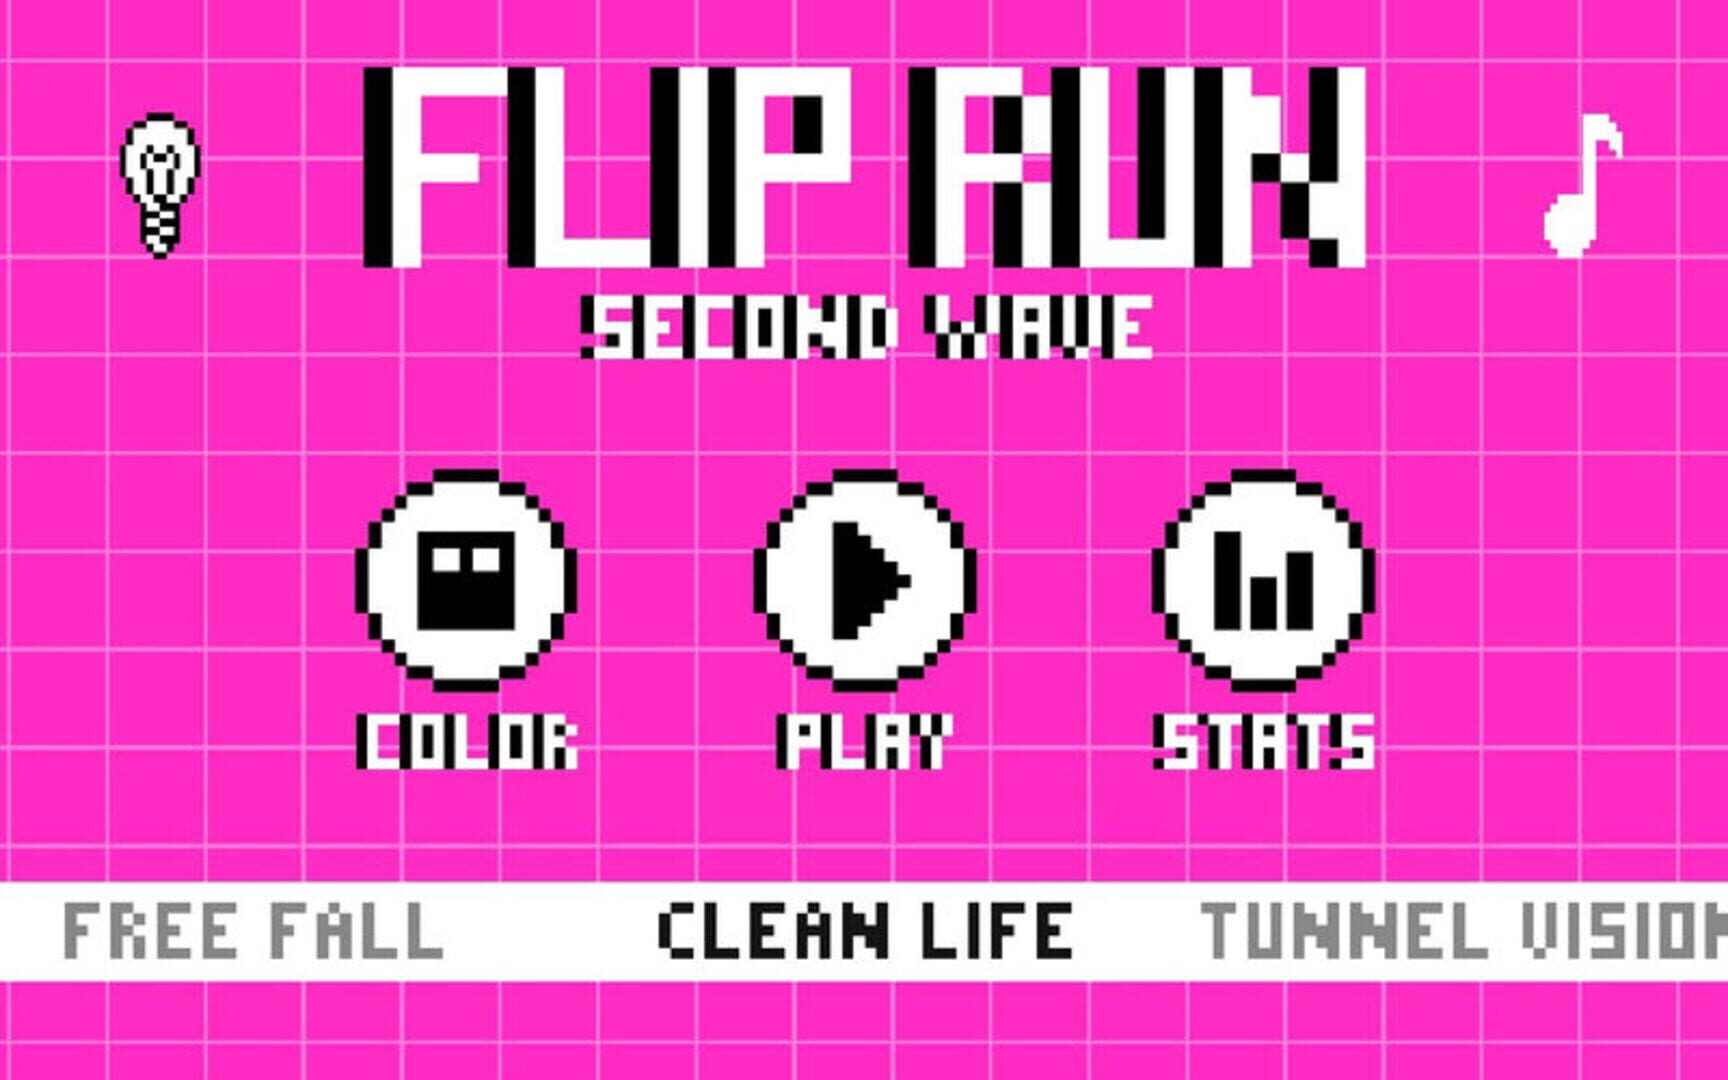 Flip Run: Second Wave